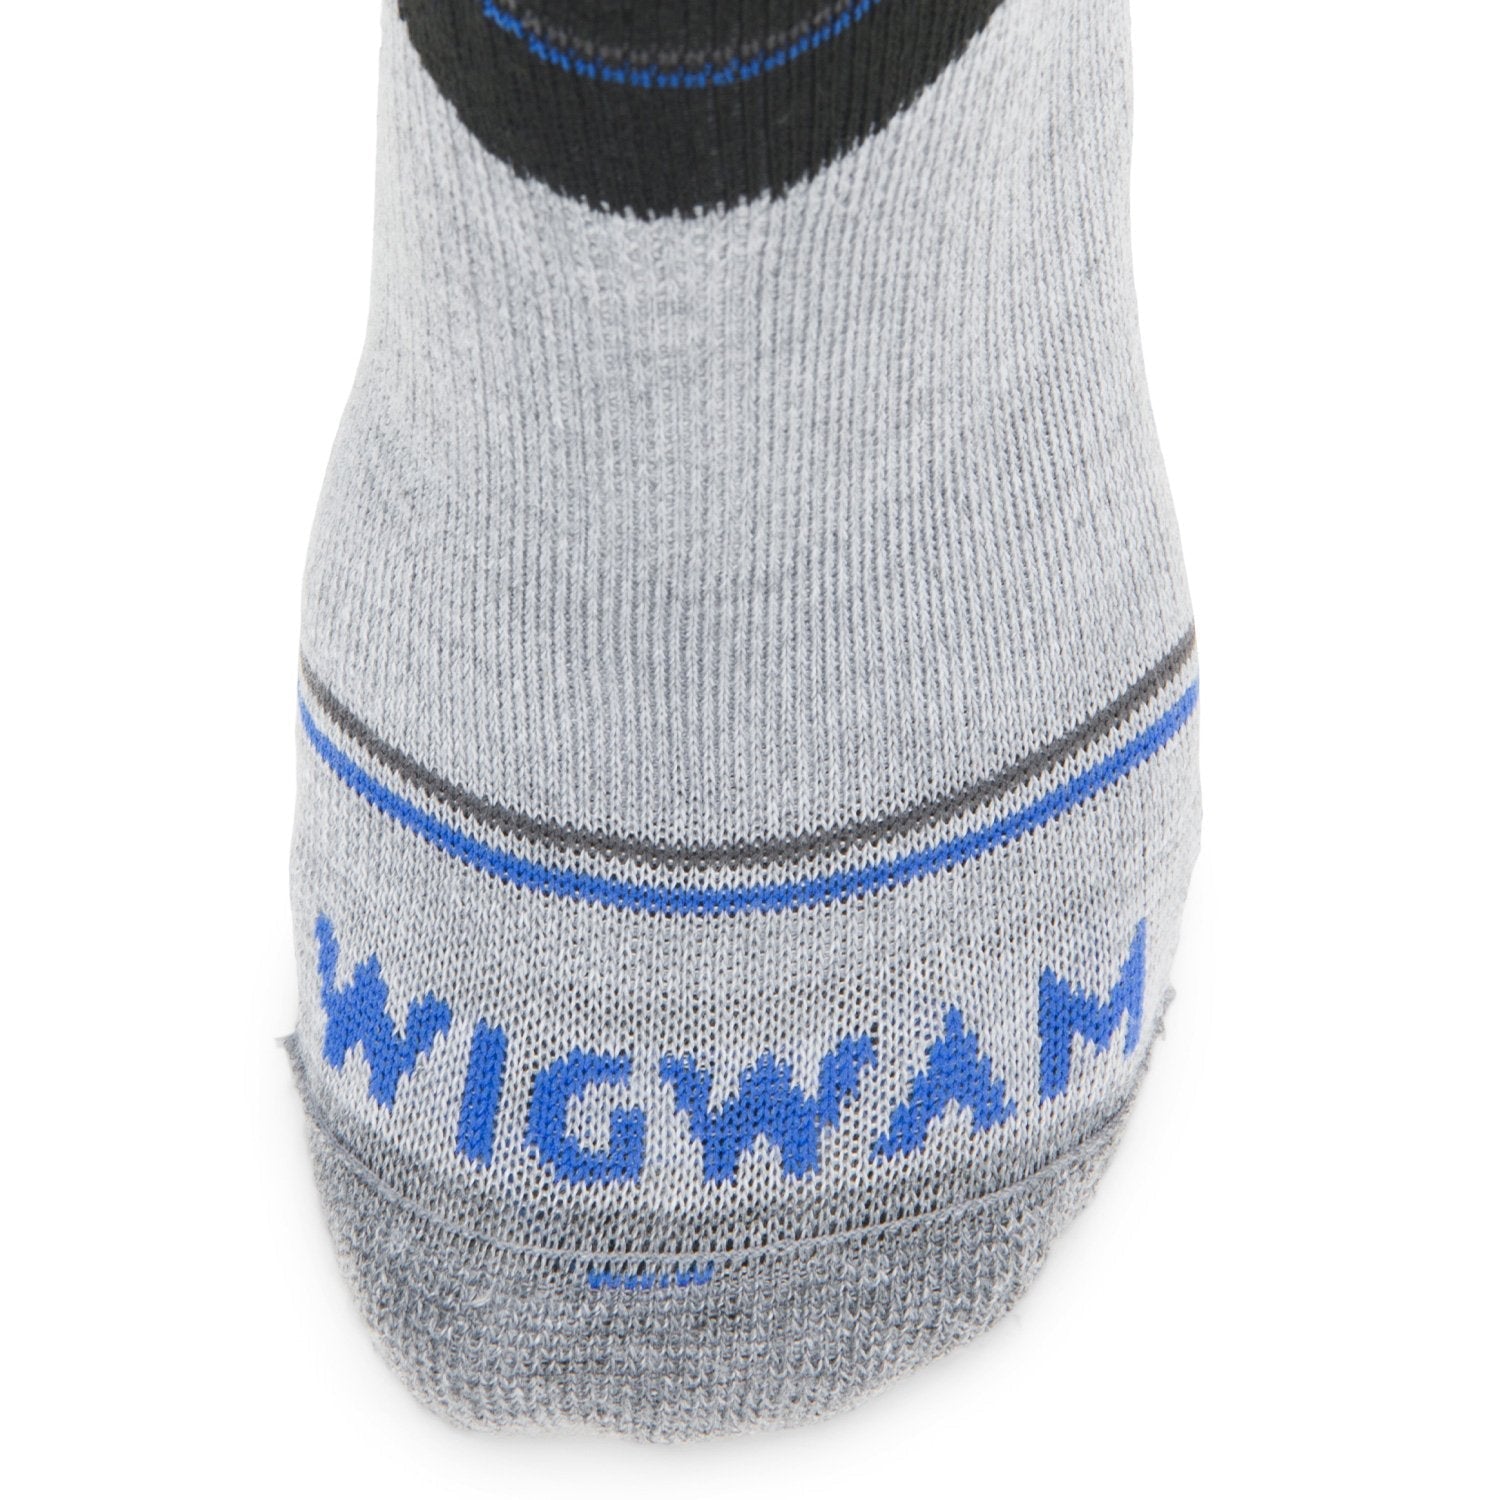 Surpass Lightweight Low Sock - Black/Grey toe perspective - made in The USA Wigwam Socks